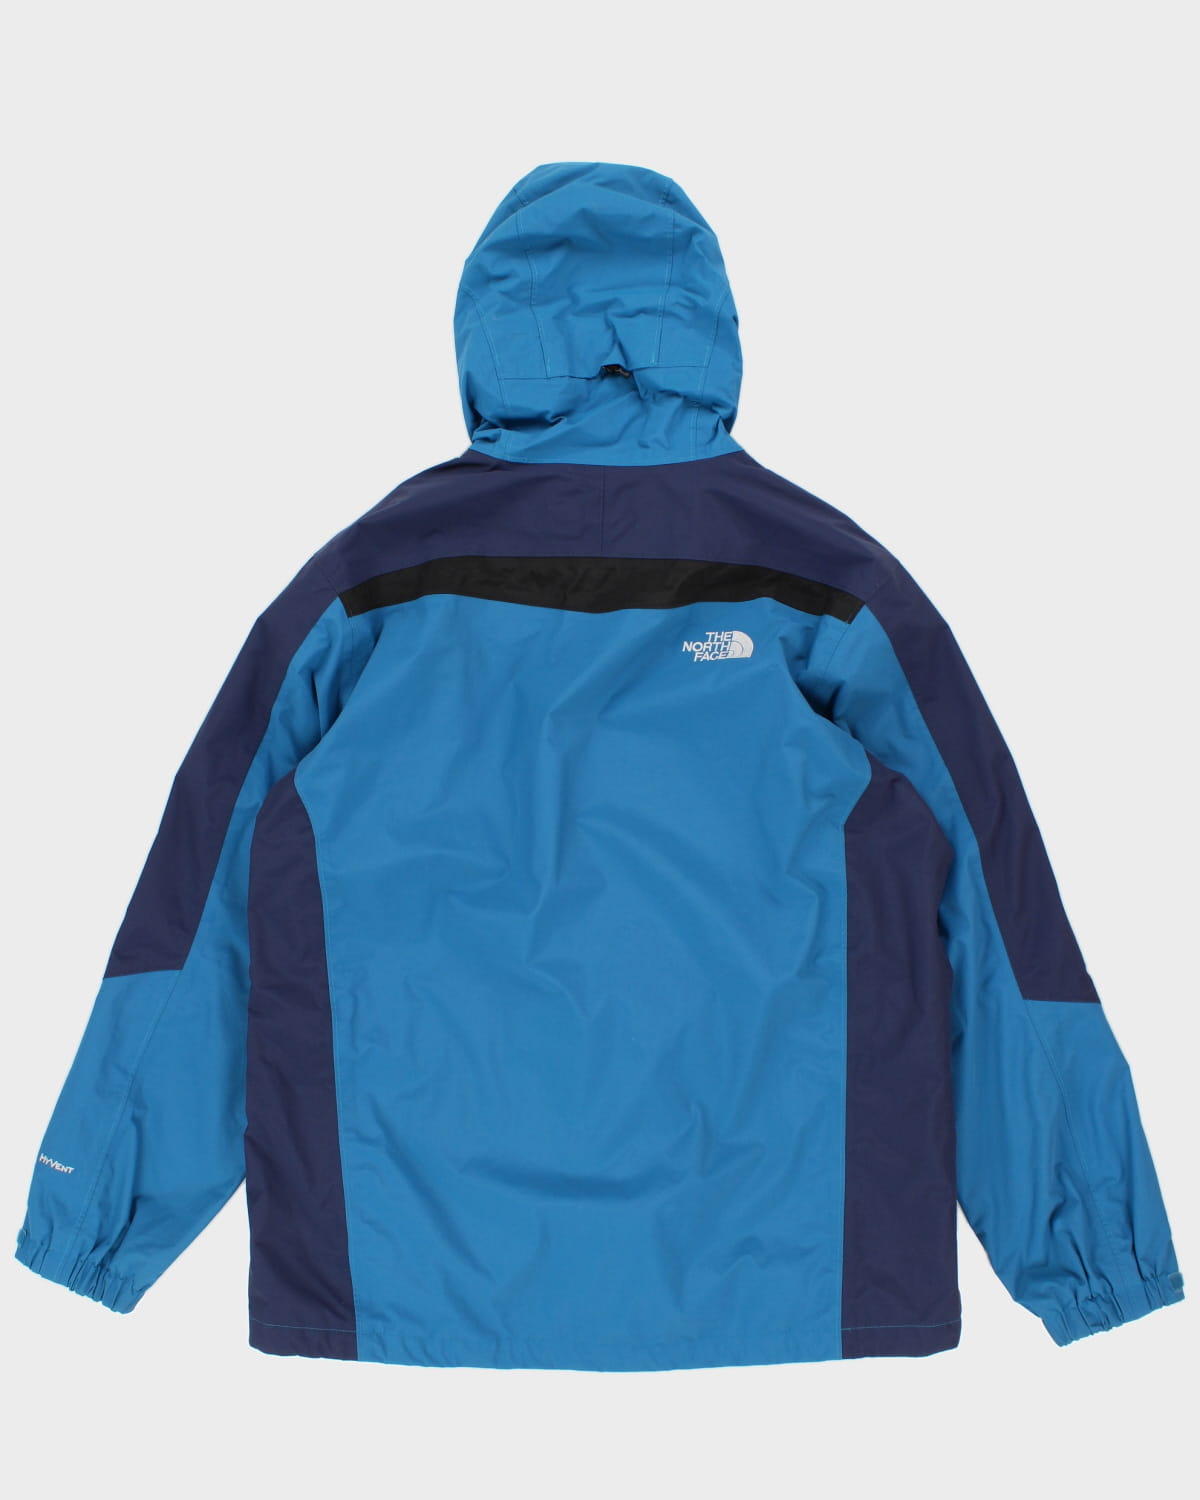 The North Face Blue Rain Jacket - XL